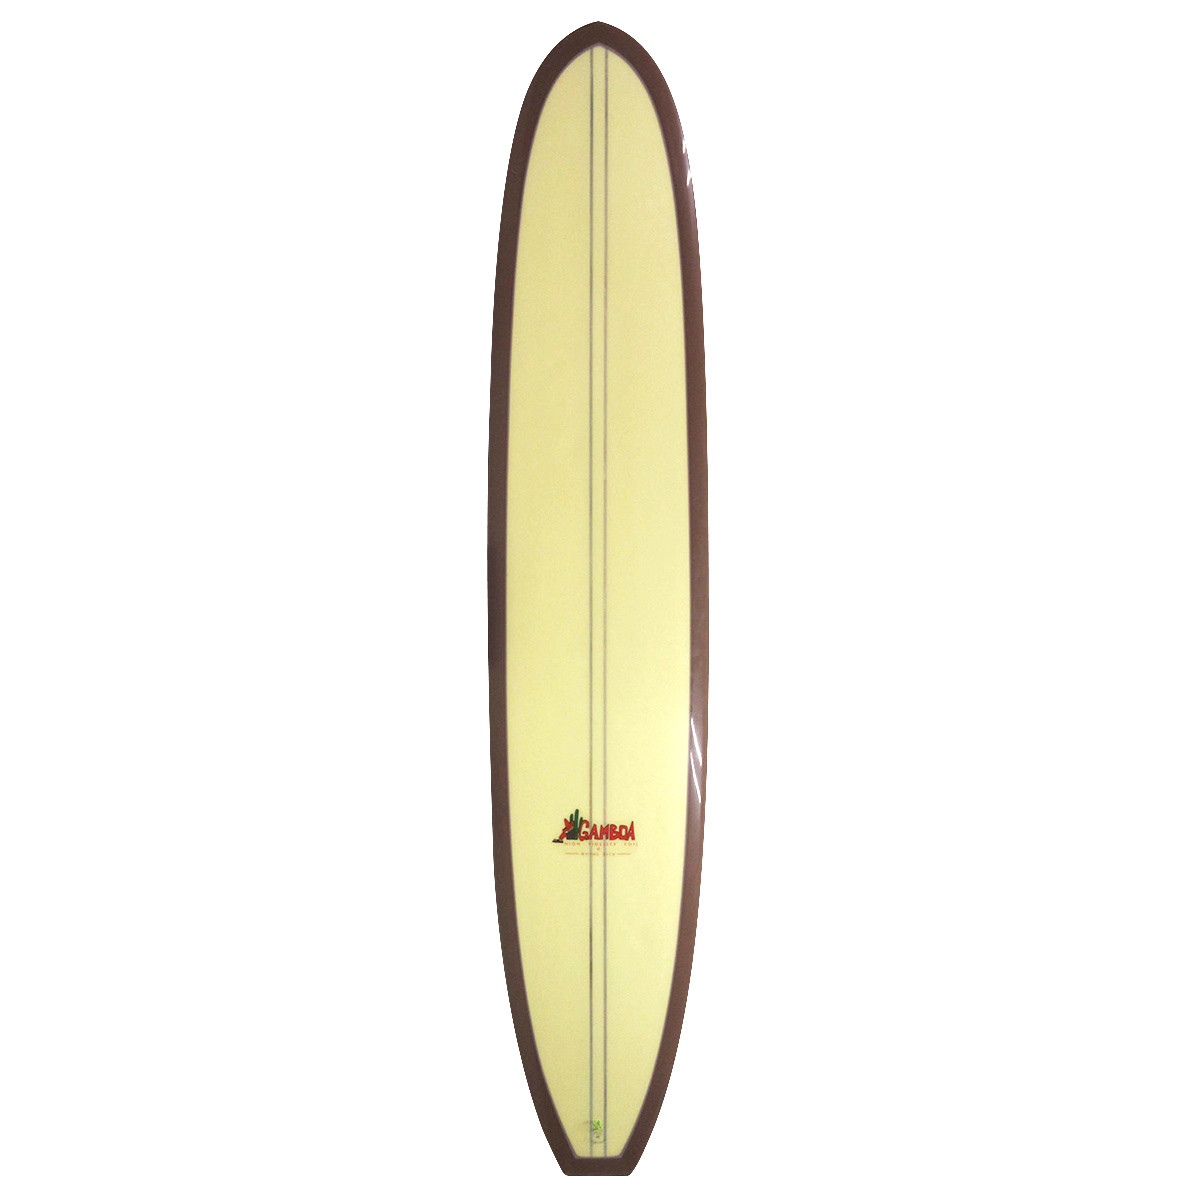 WAYNE RICH SURFBOARDS / GAMBOA Model 9`6